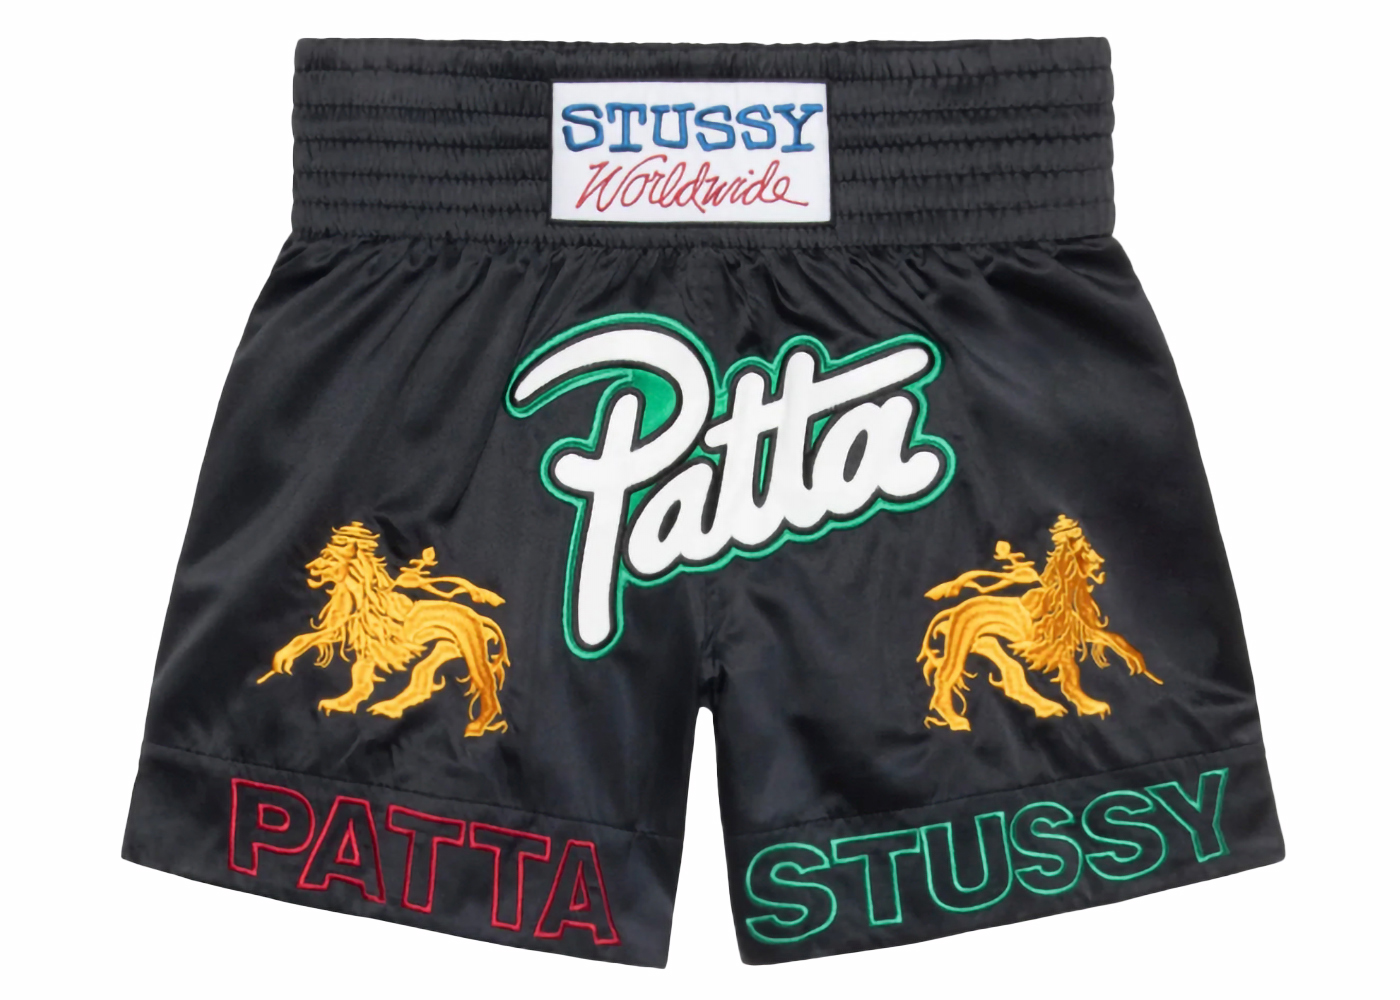 Stussy x Patta Boxing Short Black